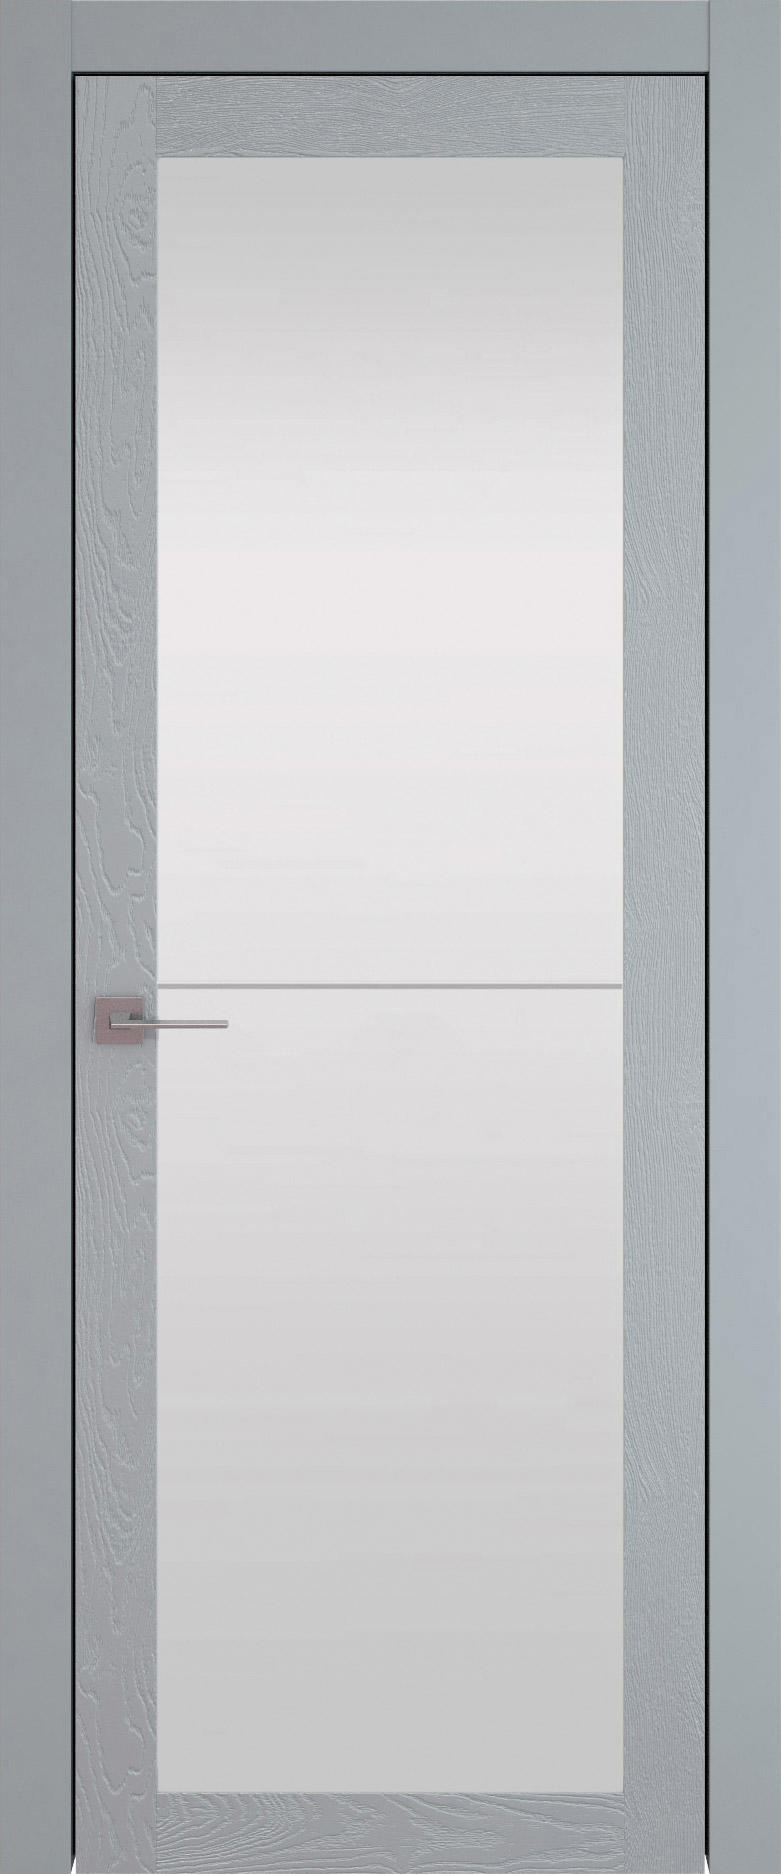 Tivoli З-2 цвет - Серебристо-серая эмаль по шпону (RAL 7045) Со стеклом (ДО)